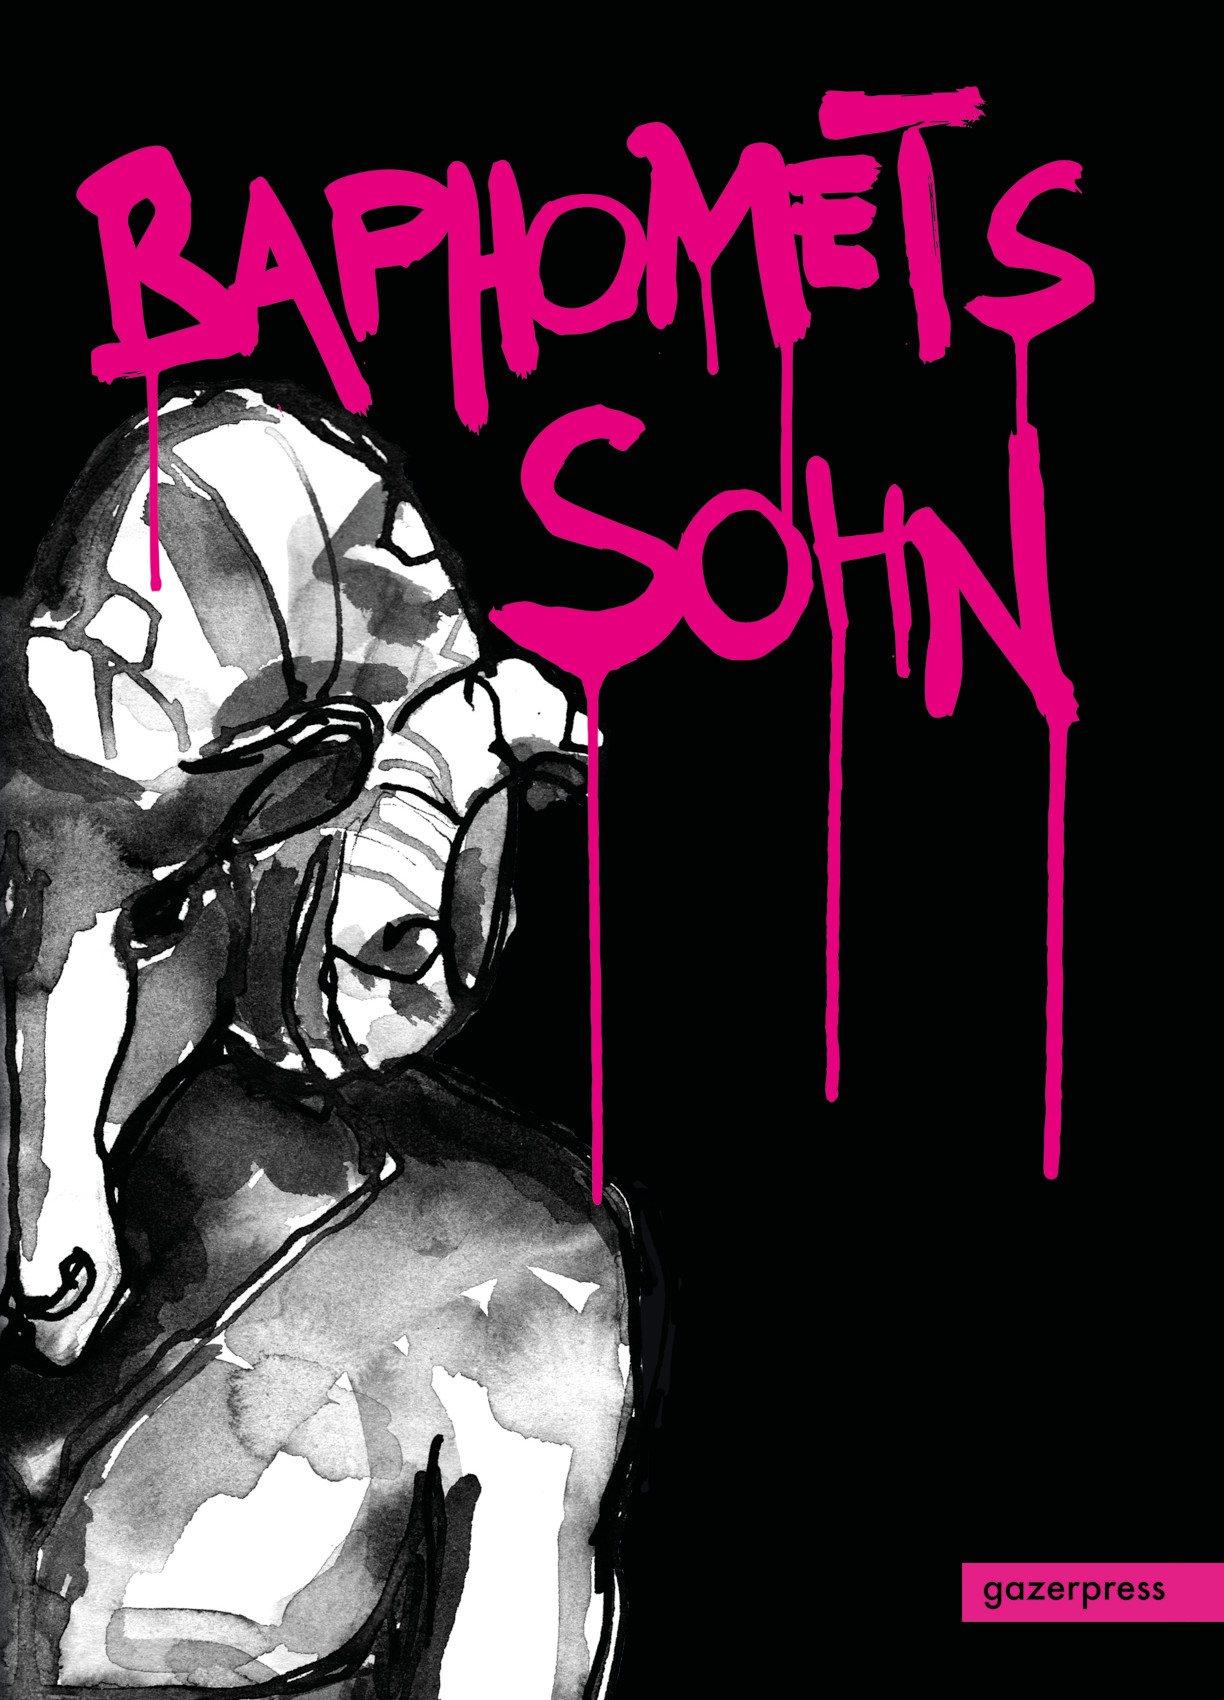 Baphomets Son, book